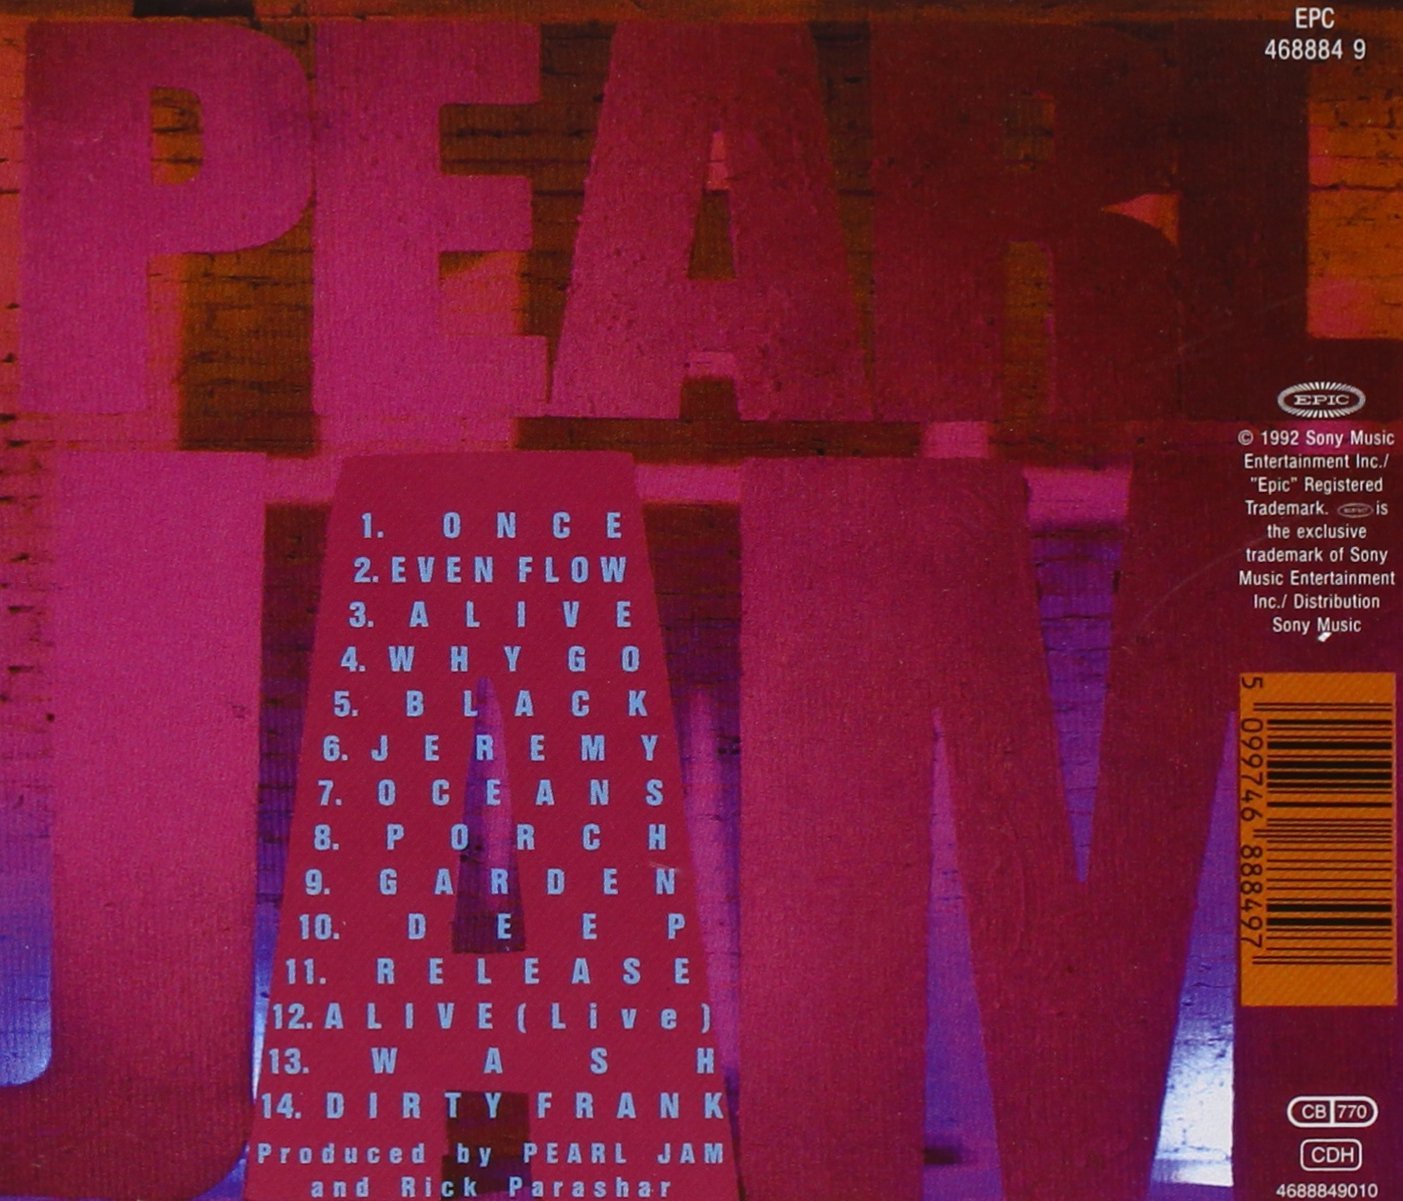 Ten - Extra tracks | Pearl Jam